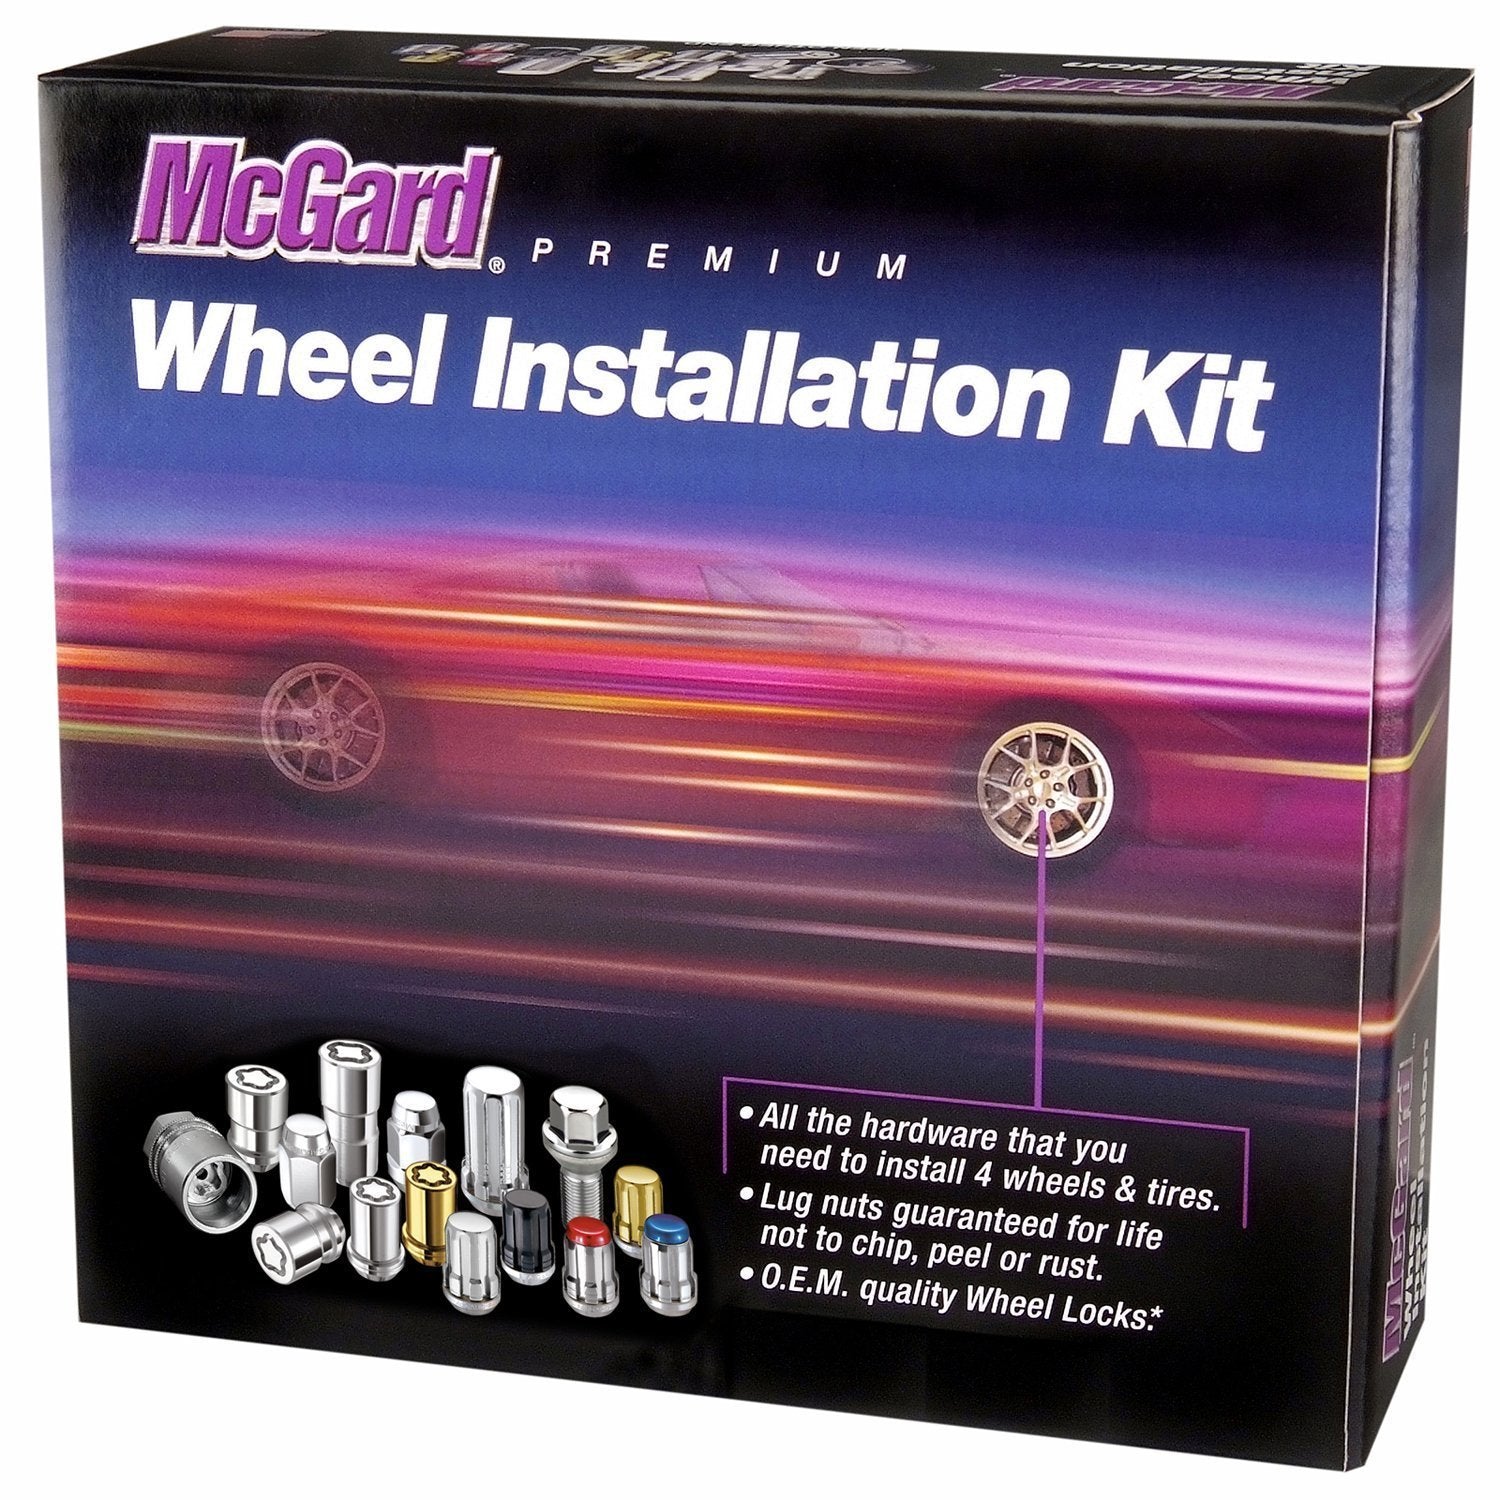 McGard, McGard Cone Seat Exposed Style Wheel Installation Kit / Chrome (84557)